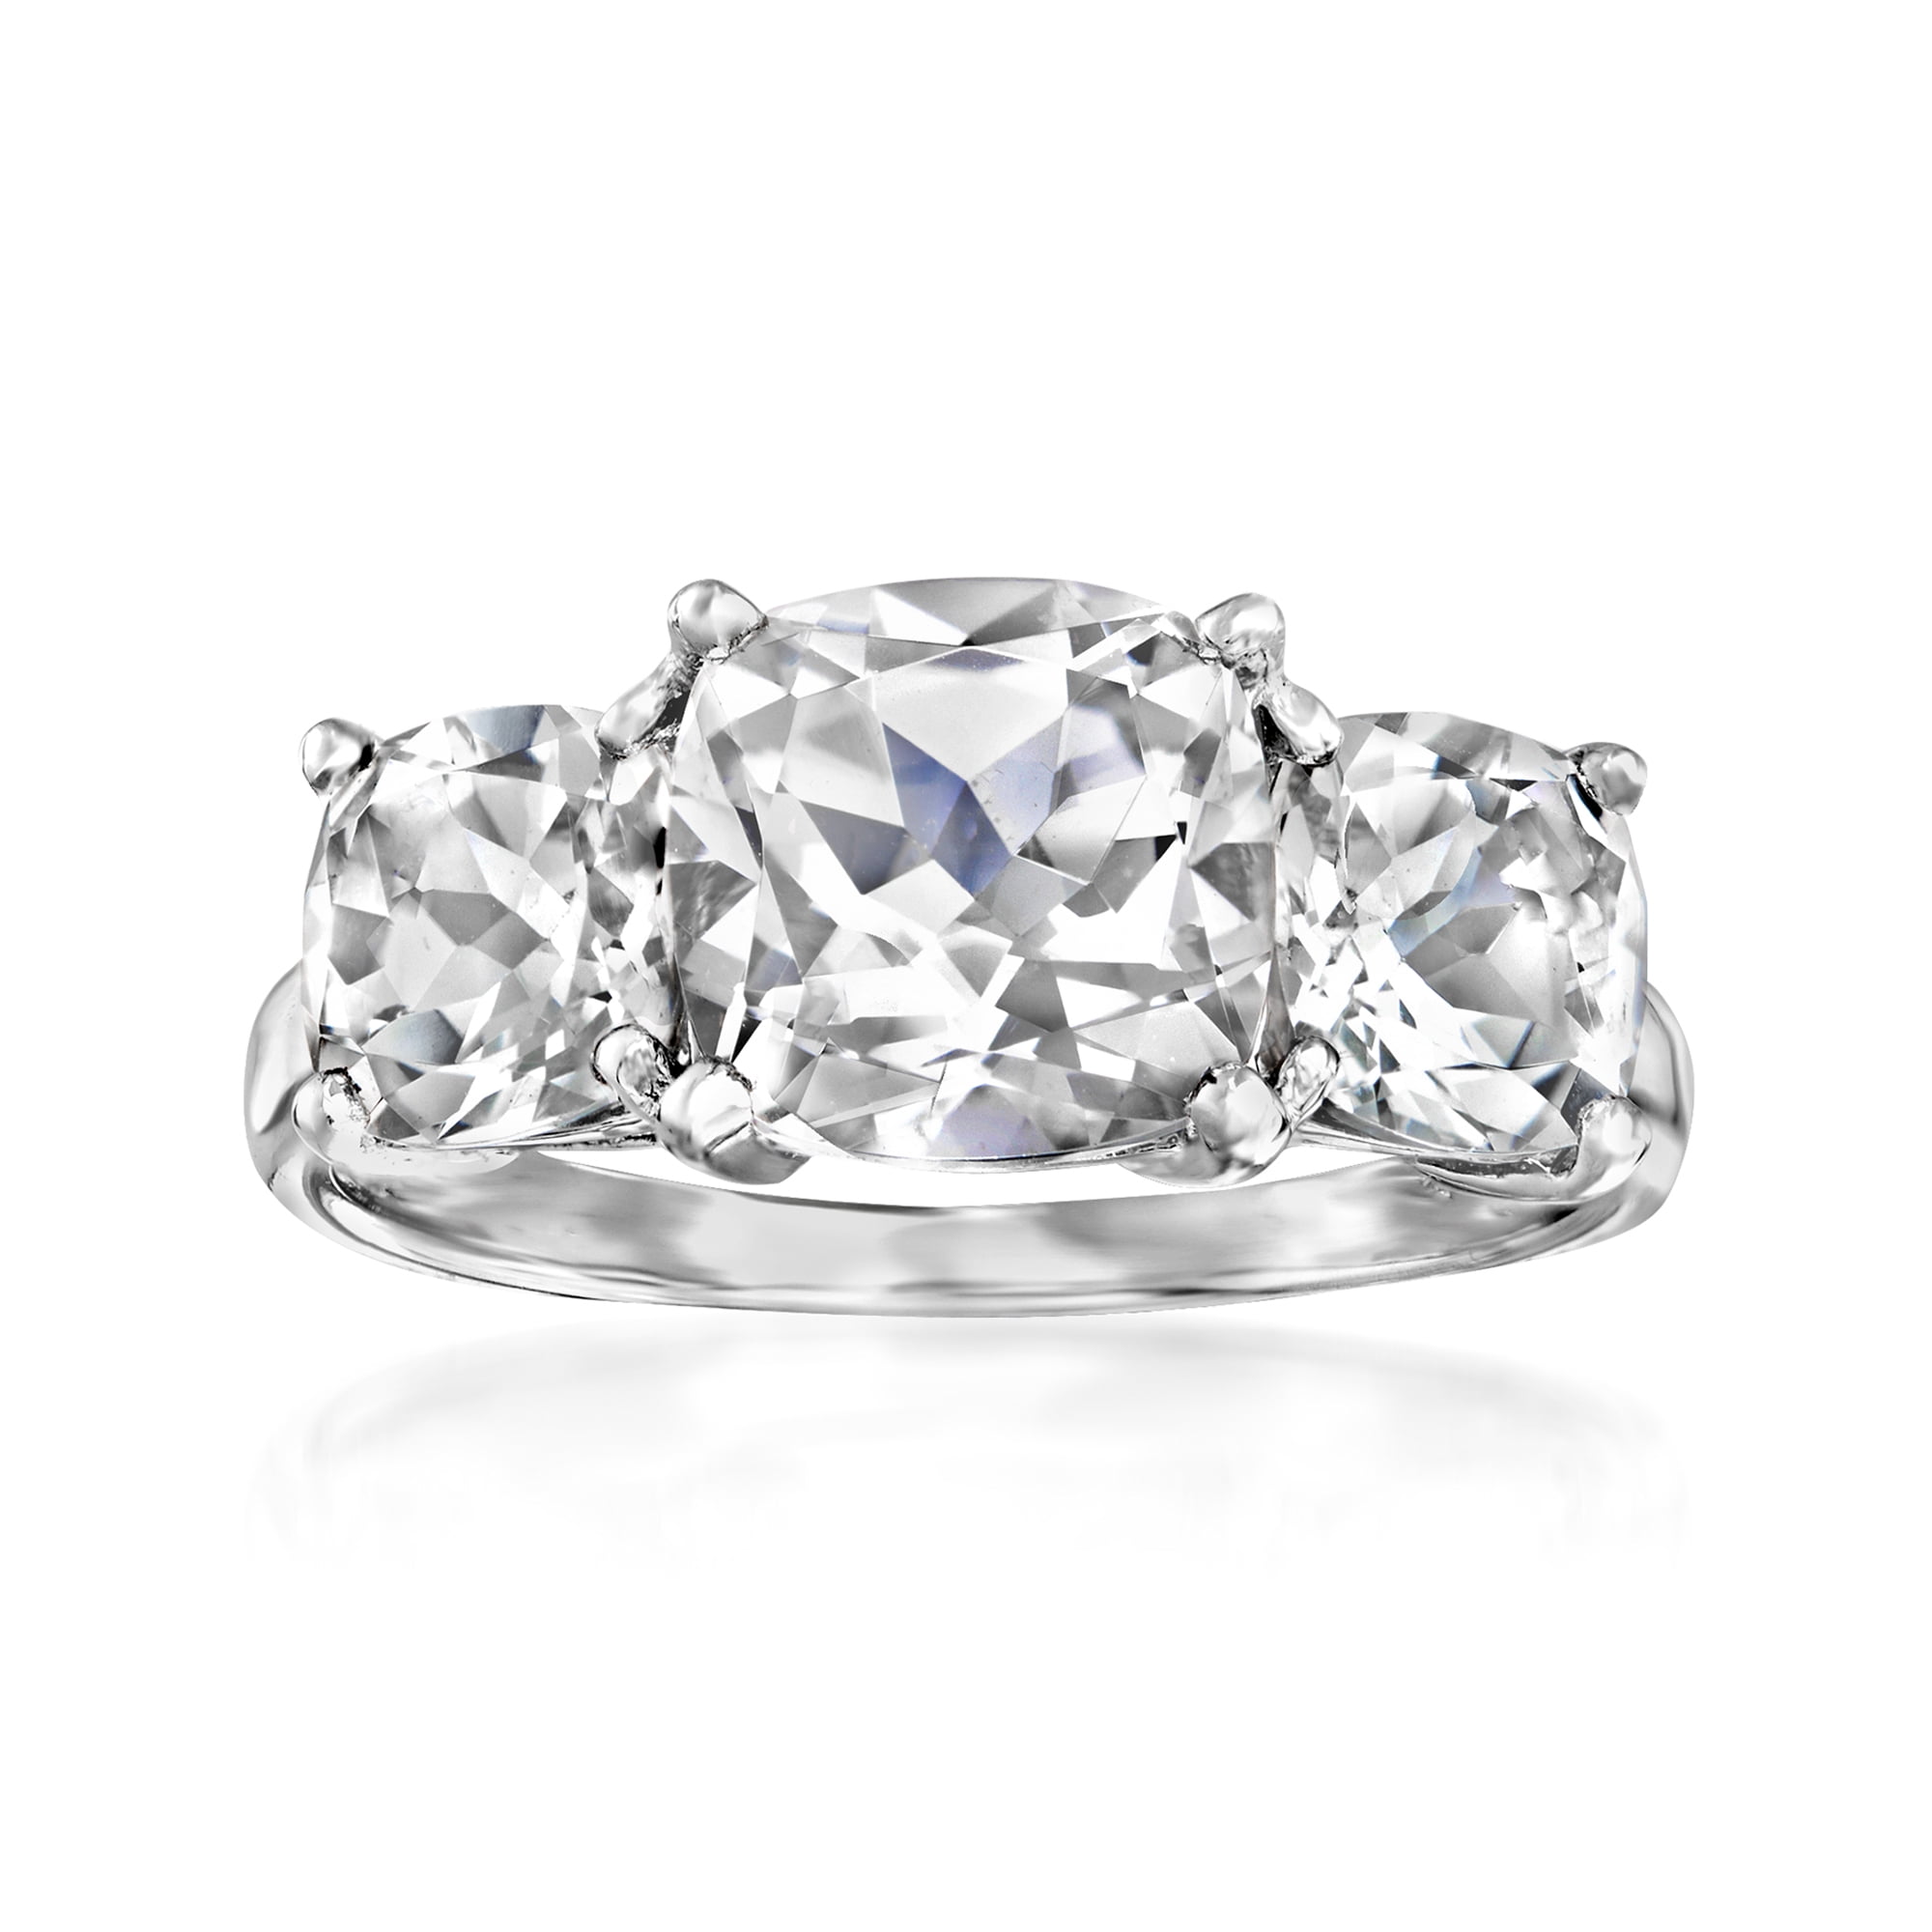 4.50Ct Cushion Cut Diamond Three Stone Engagement Ring In 14K White Gold Finish 